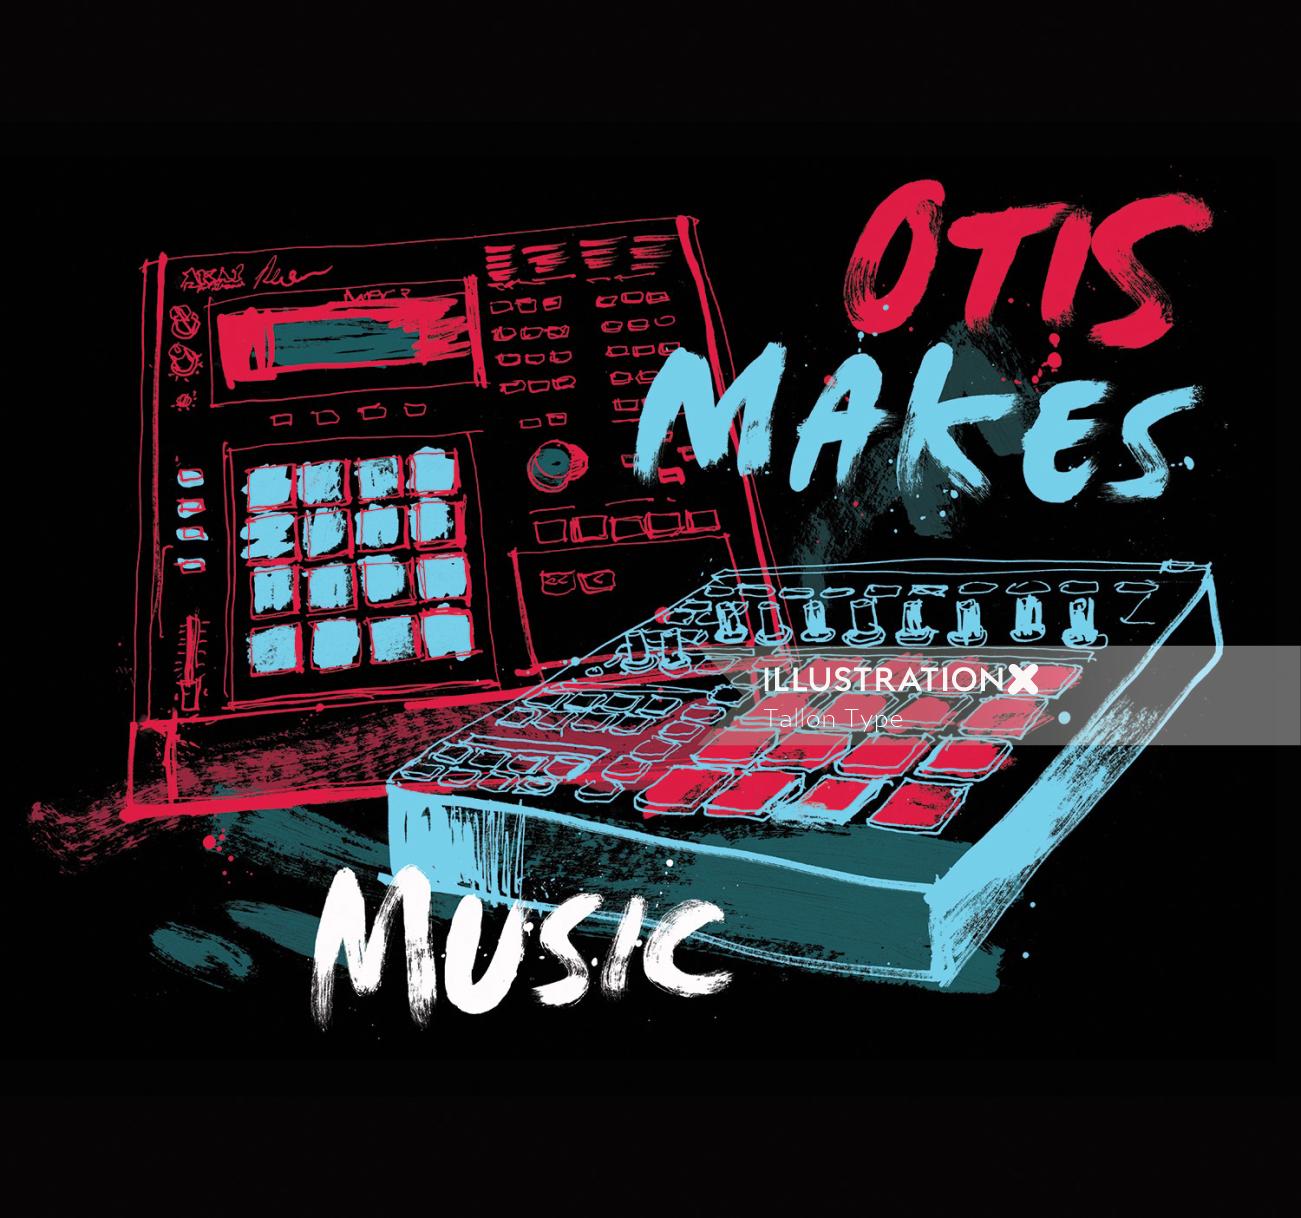 Otis makes music typography art